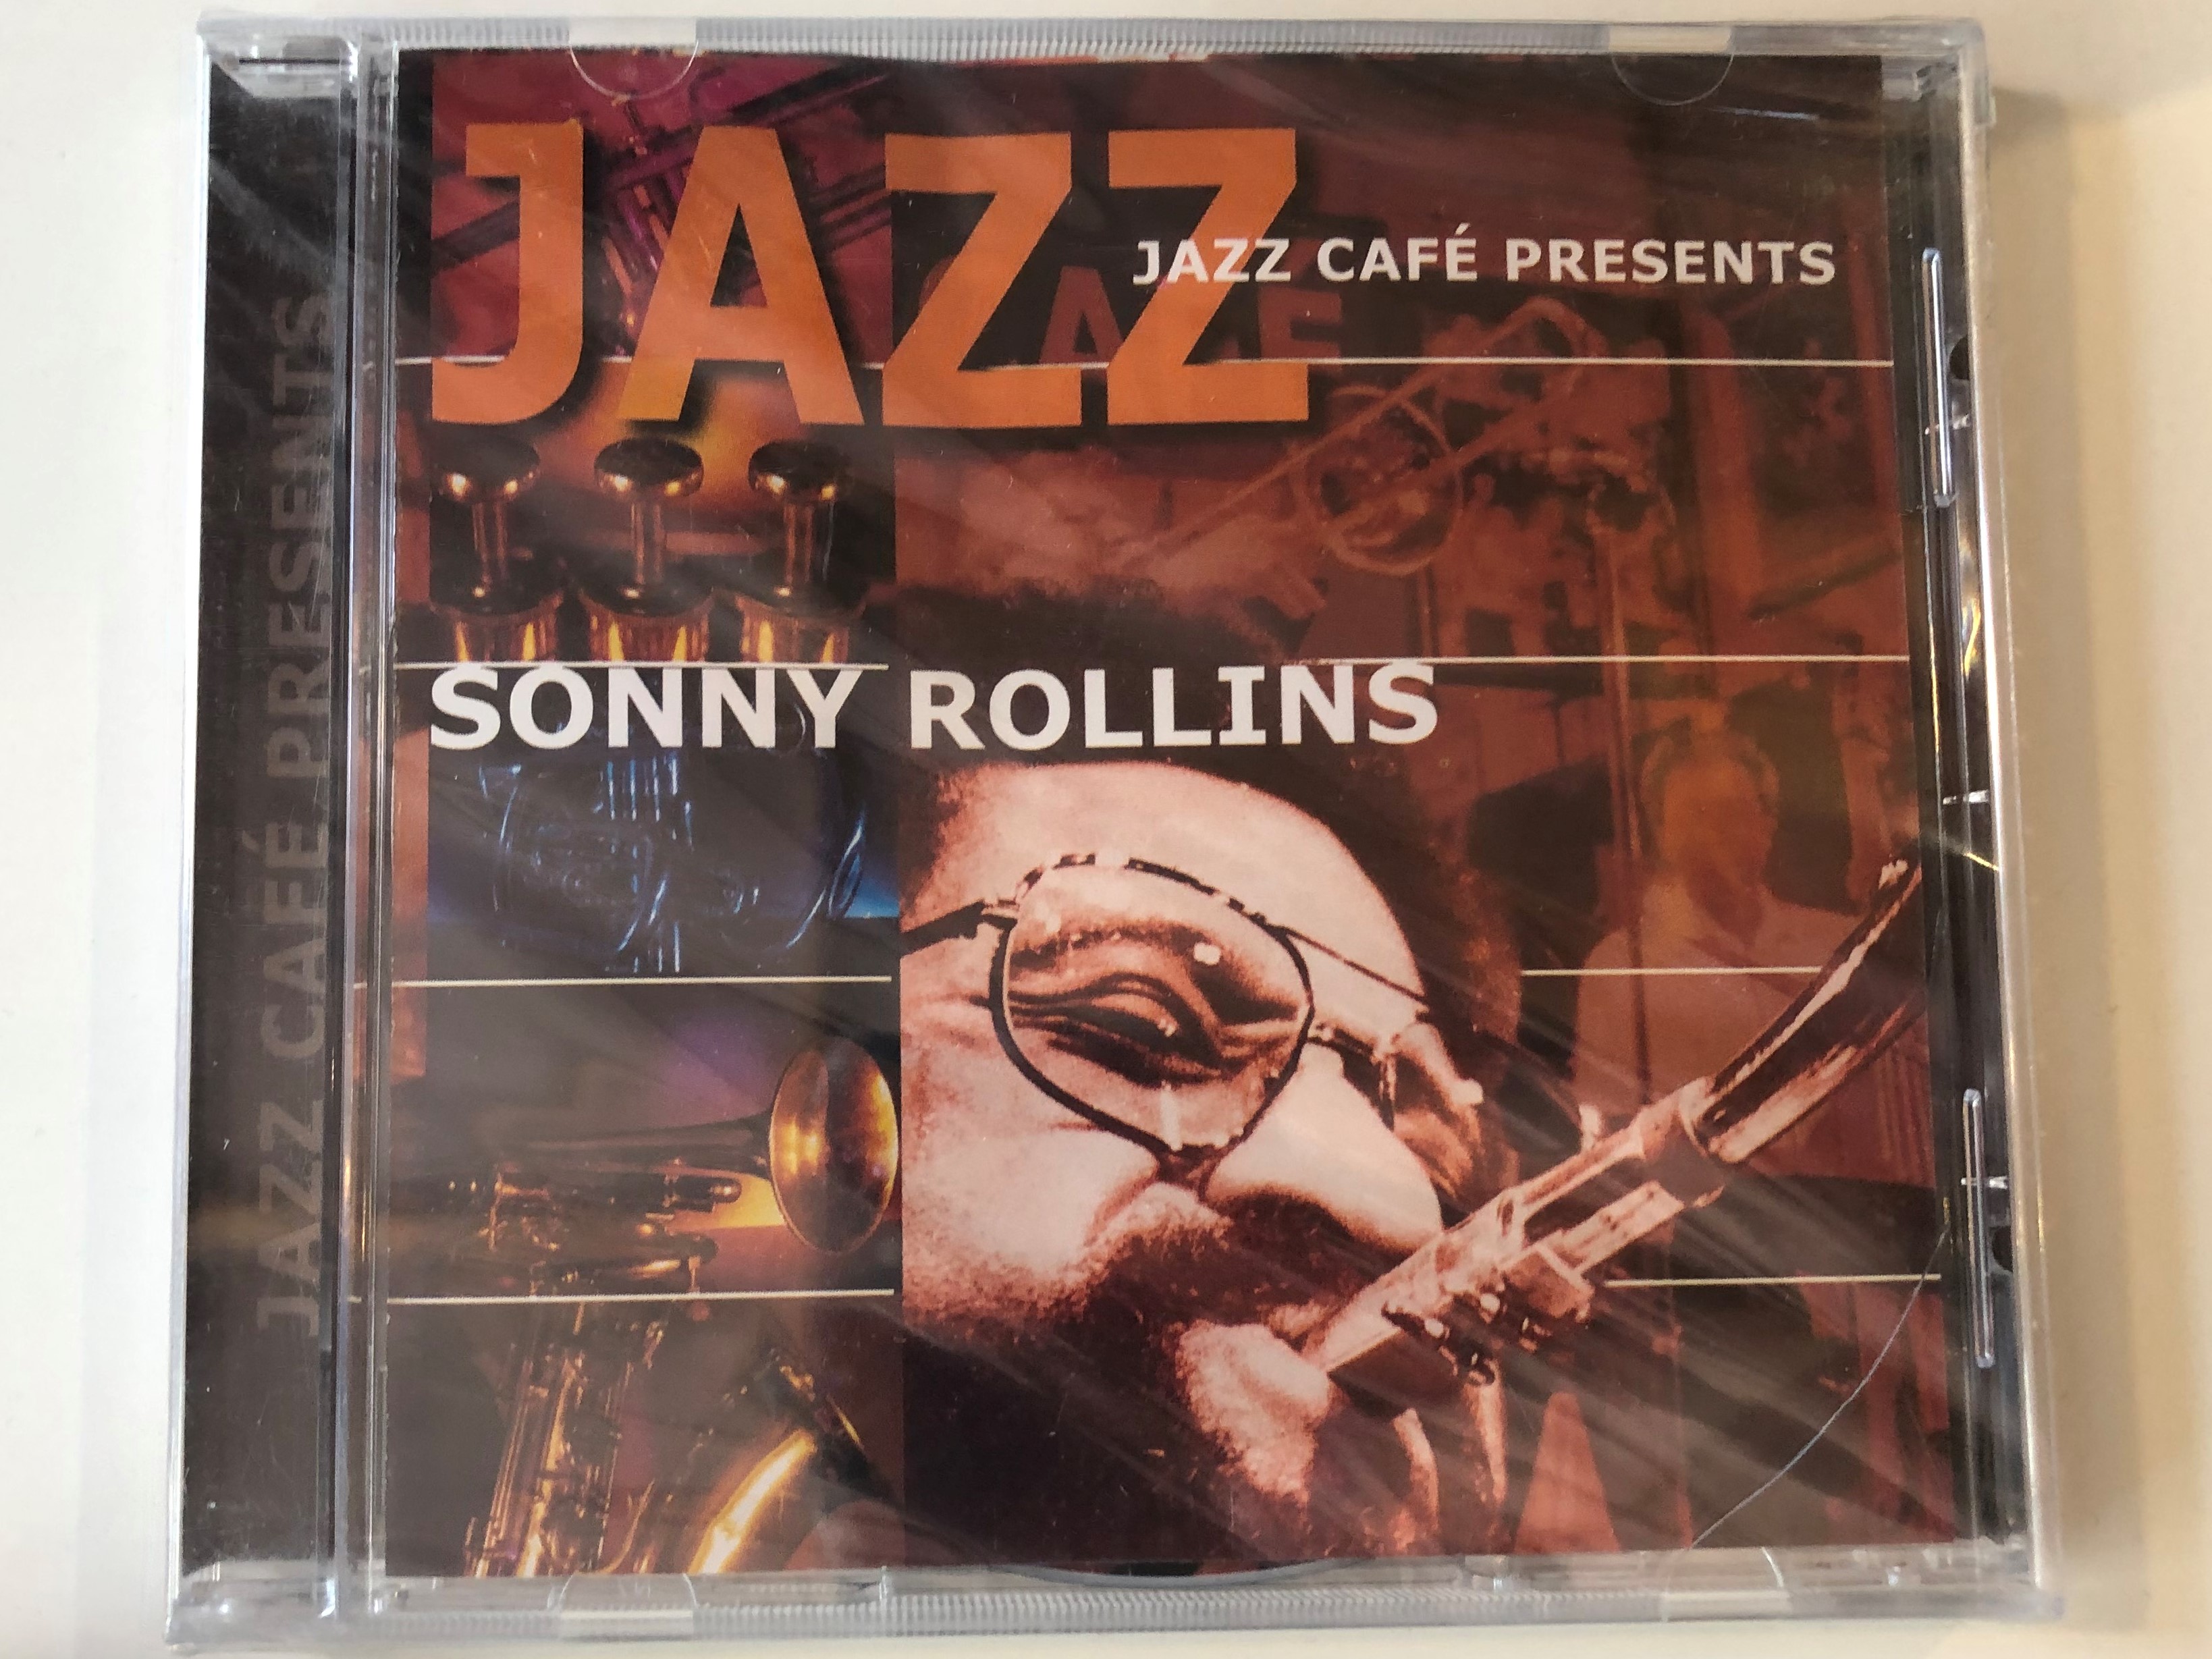 jazz-caf-presents-sonny-rollins-gateway-records-audio-cd-2001-3899322-1-.jpg